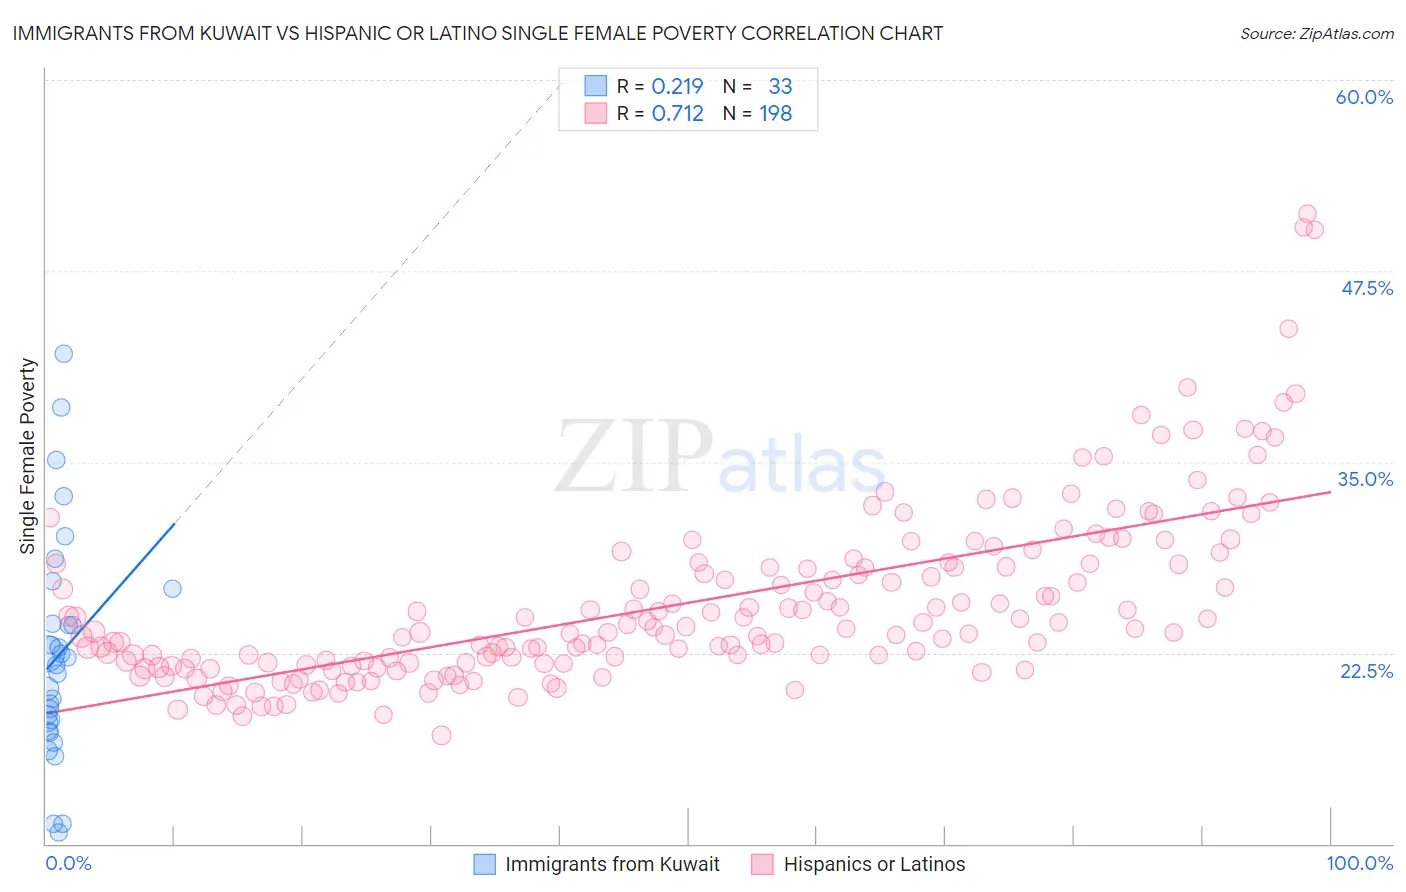 Immigrants from Kuwait vs Hispanic or Latino Single Female Poverty